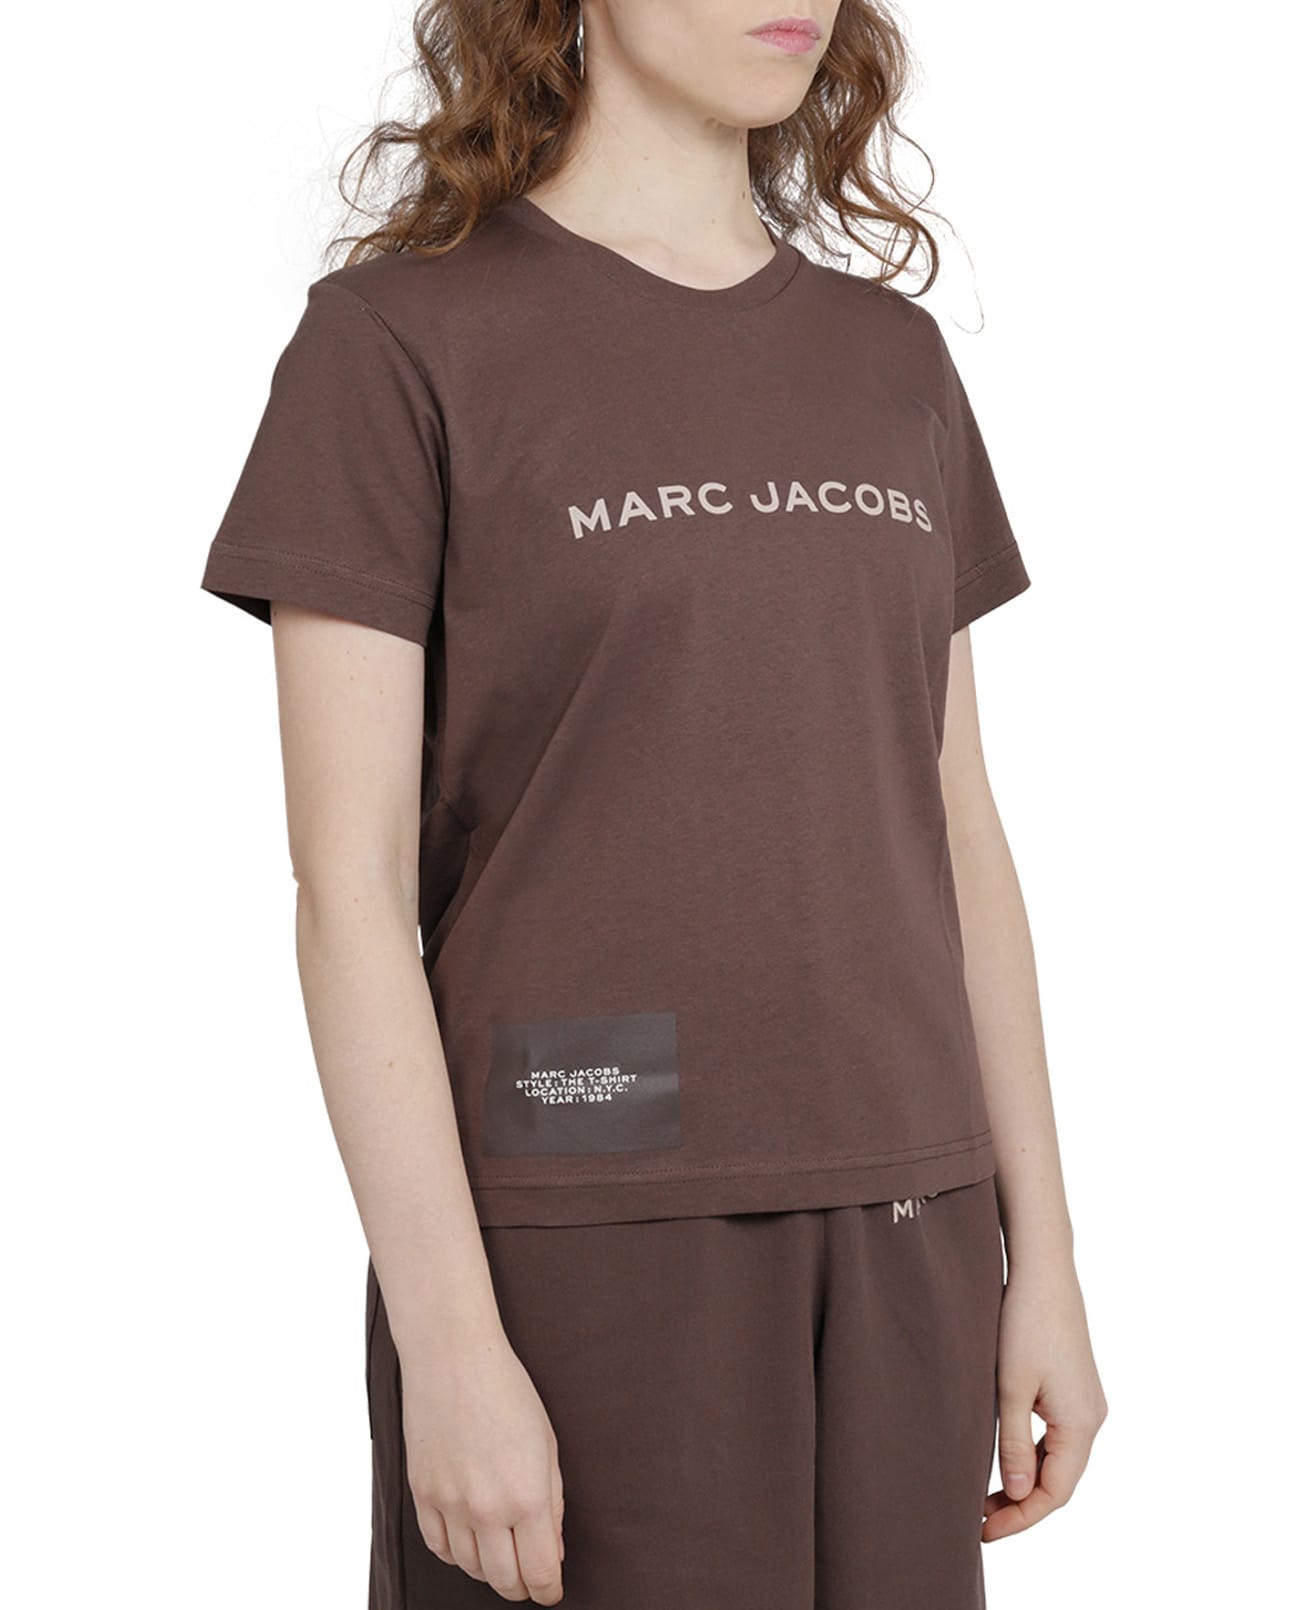 Marc Jacobs Brown T-shirt